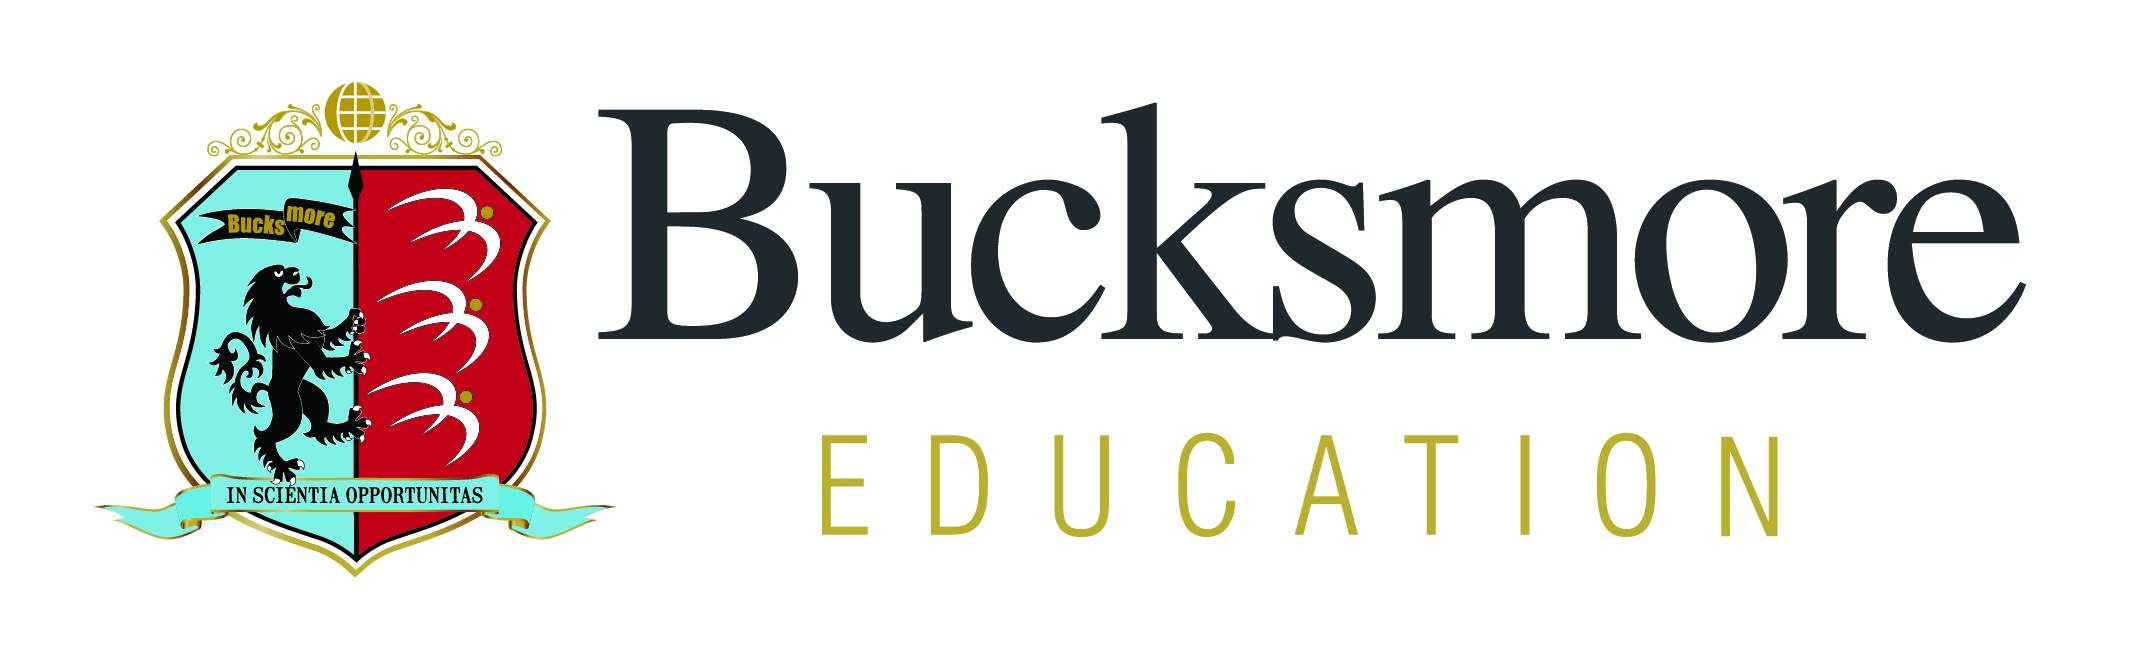 bucksmore-education-logo-horizontal-colour-300ppi.jpg